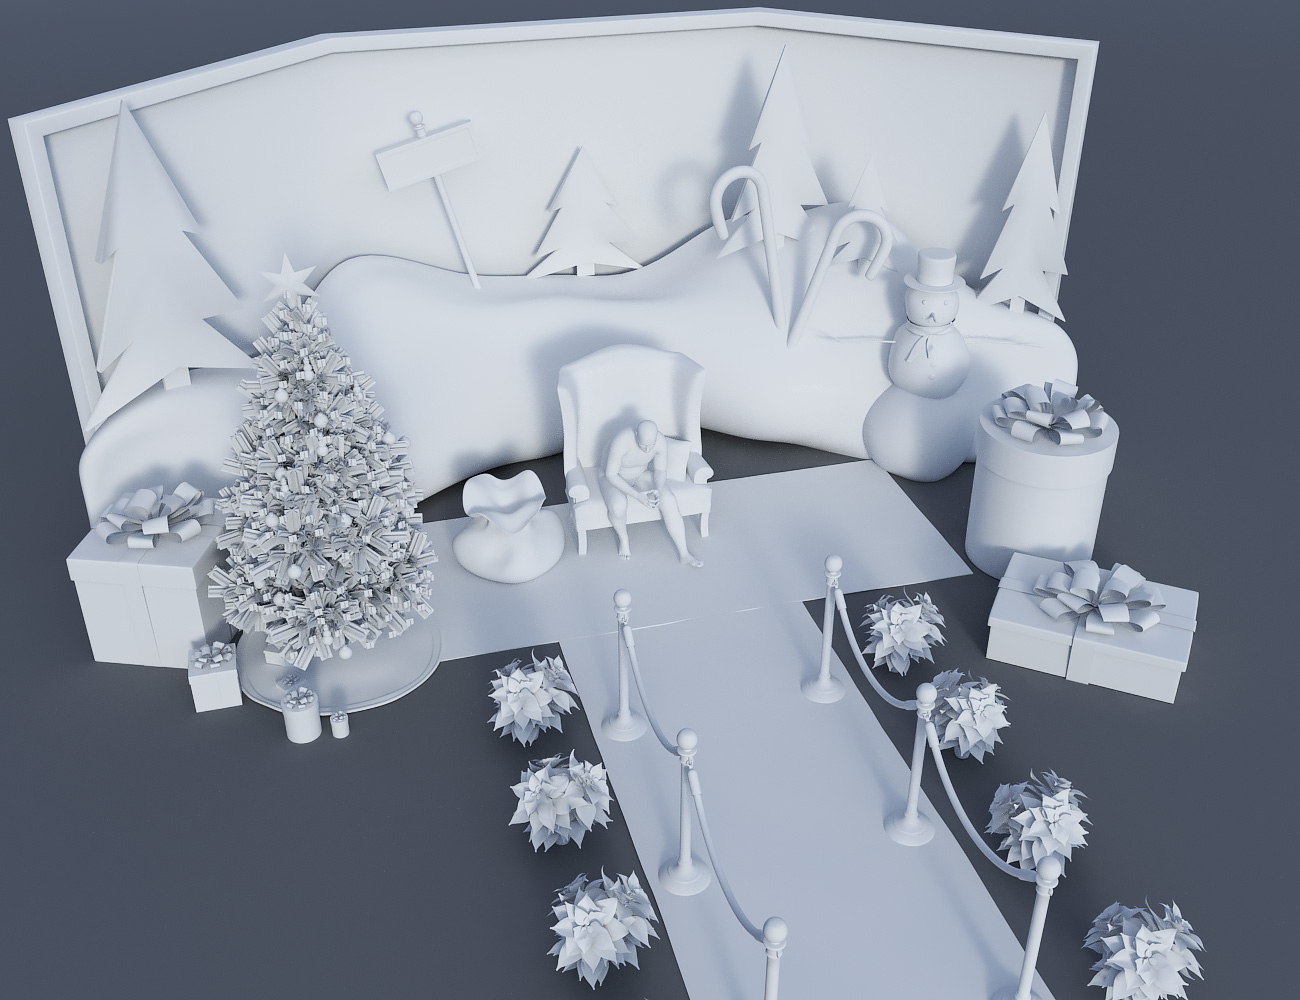 Mall Santa Scene and Props by: ARTCollabBlackbeard Media, 3D Models by Daz 3D